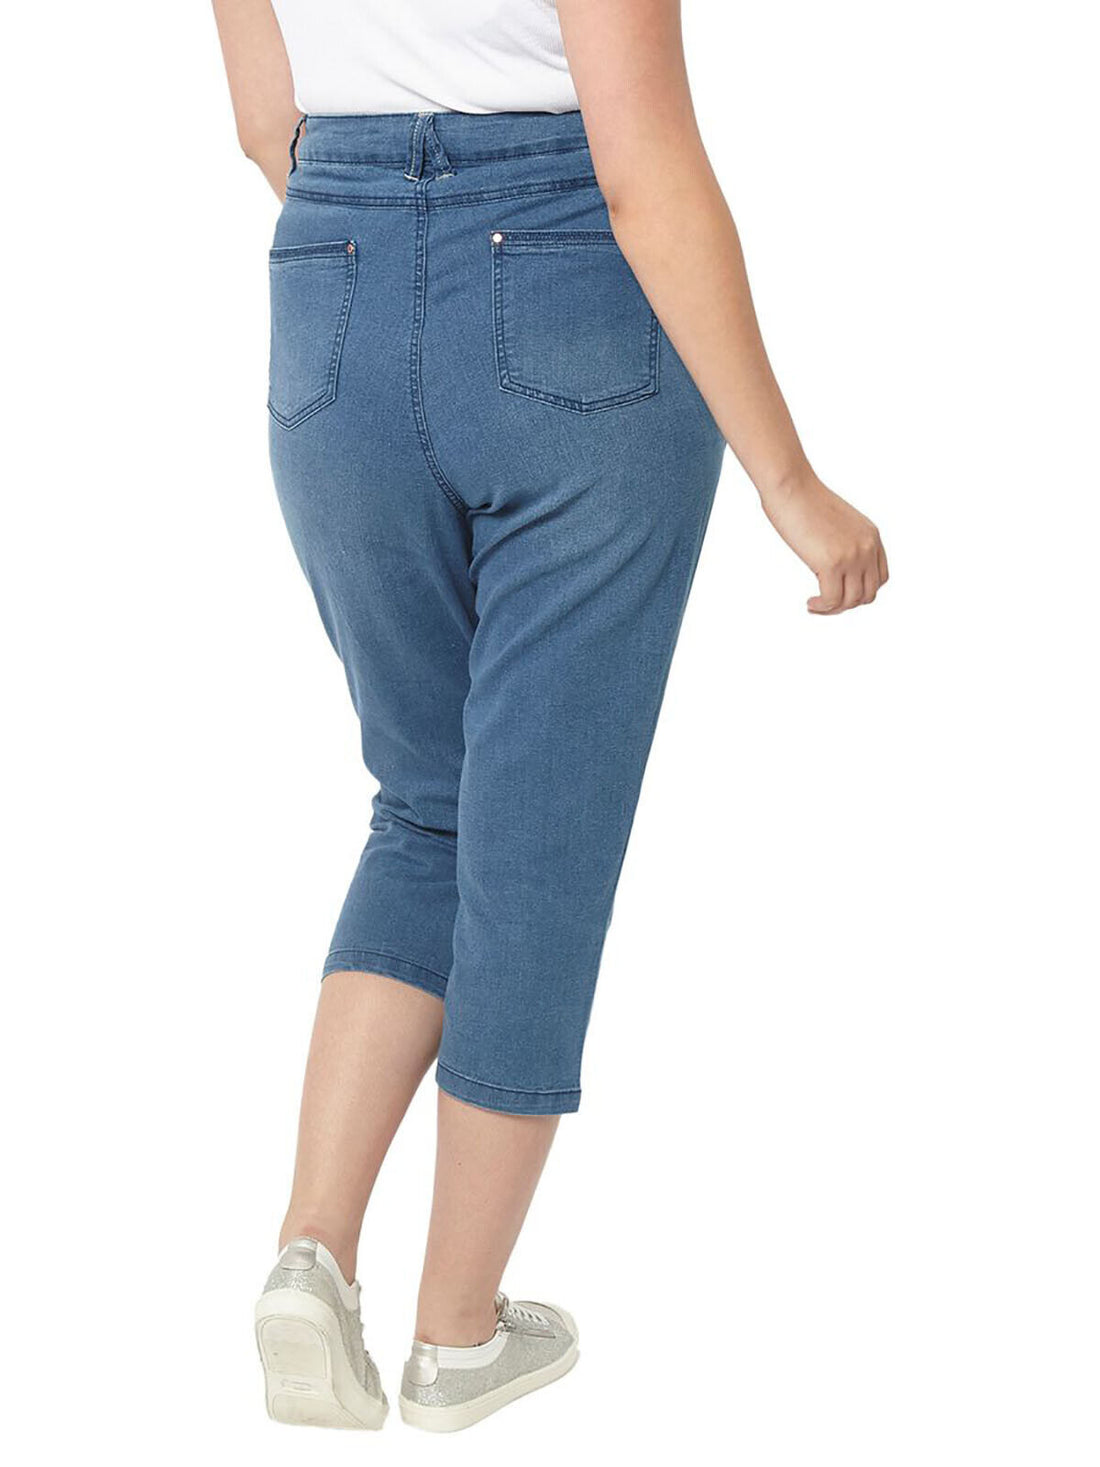 EX EVANS Blue-Denim Cropped Denim Jeans in Size 30